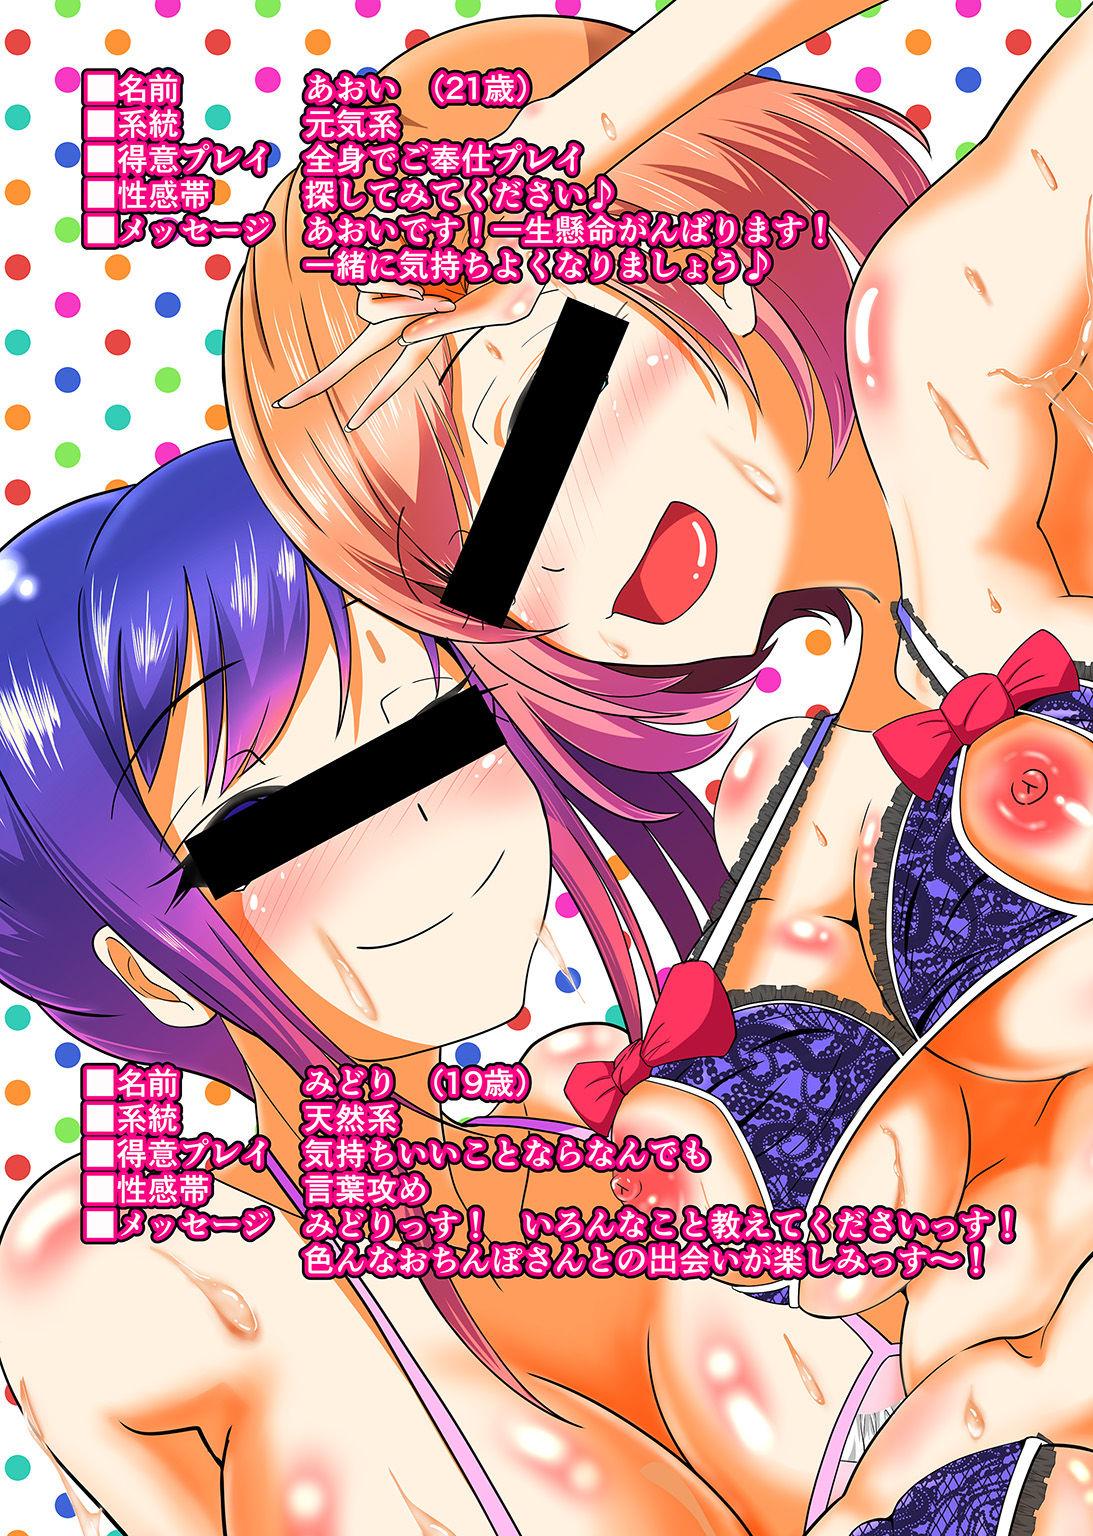 Lesbians Moshimo Musani ga Deliheal Dattara - Shirobako Shower - Page 28